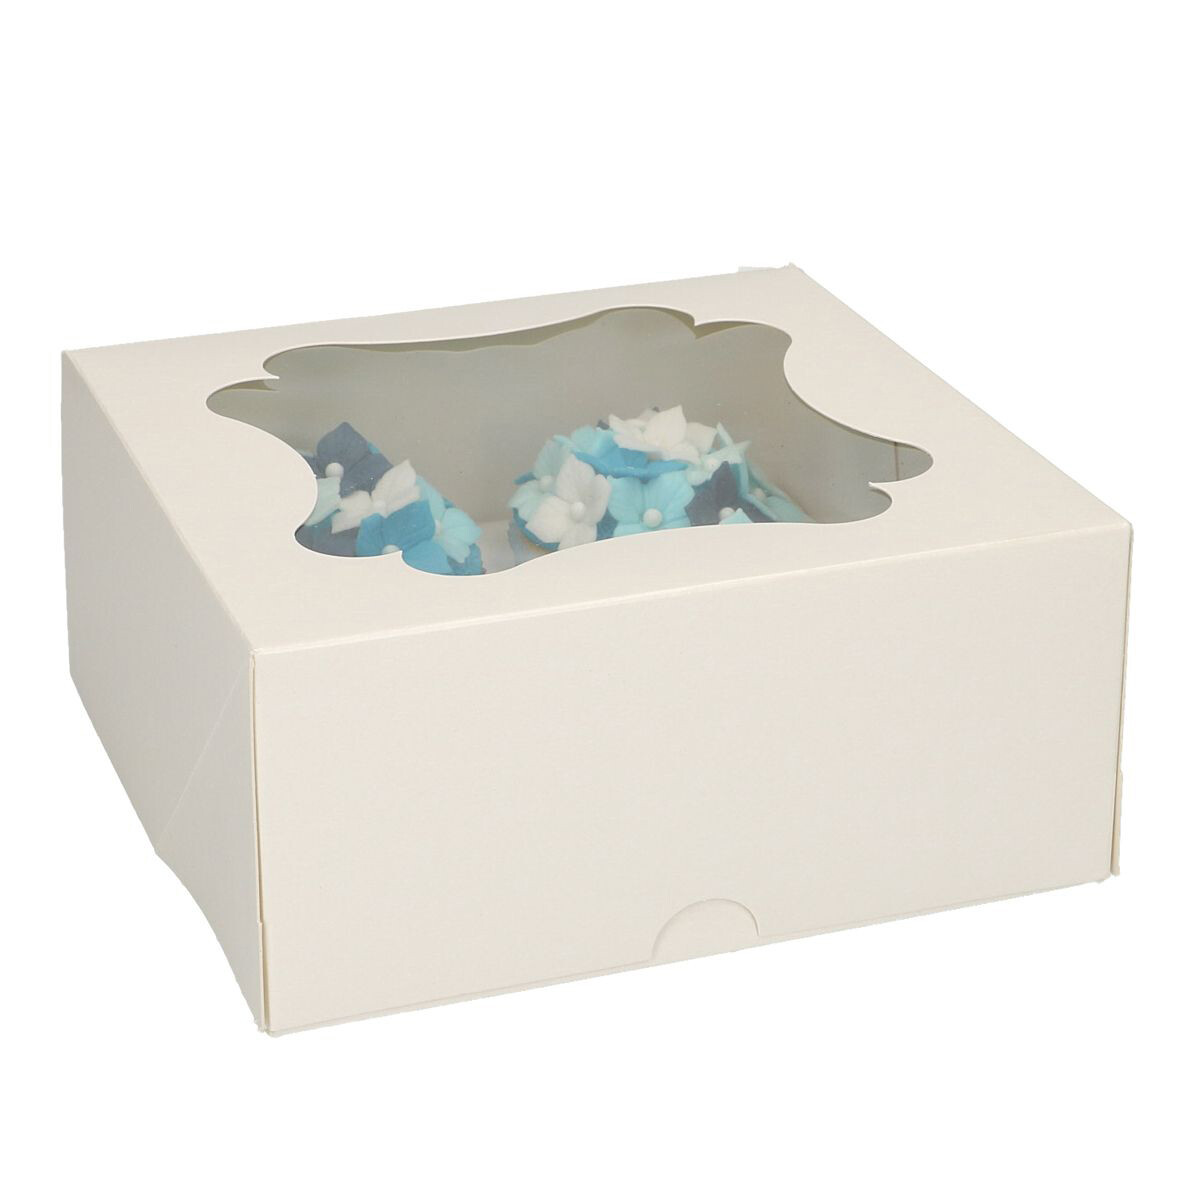 Box for 4 Cupcakes or 8 Mini-Cupcakes -Κουτί για 4 Καπκέικς ή για 8 μίνι καπκέικς